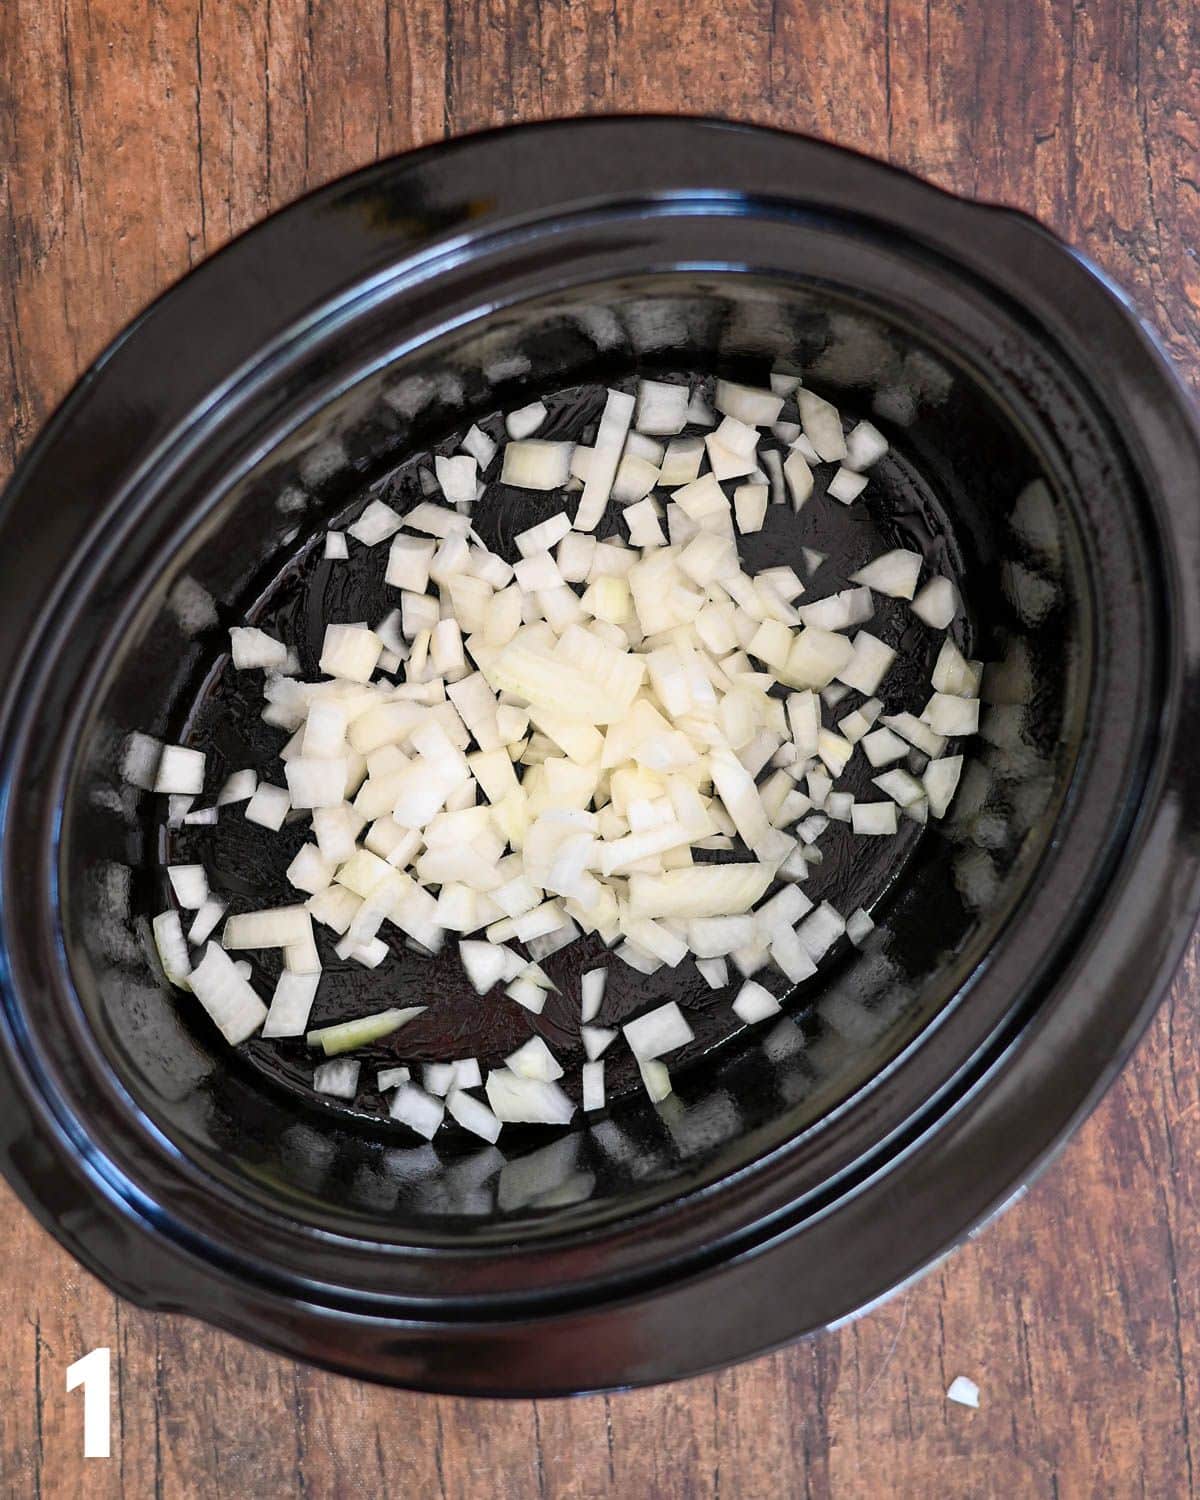 Chopped onion in a crock pot bowl. 